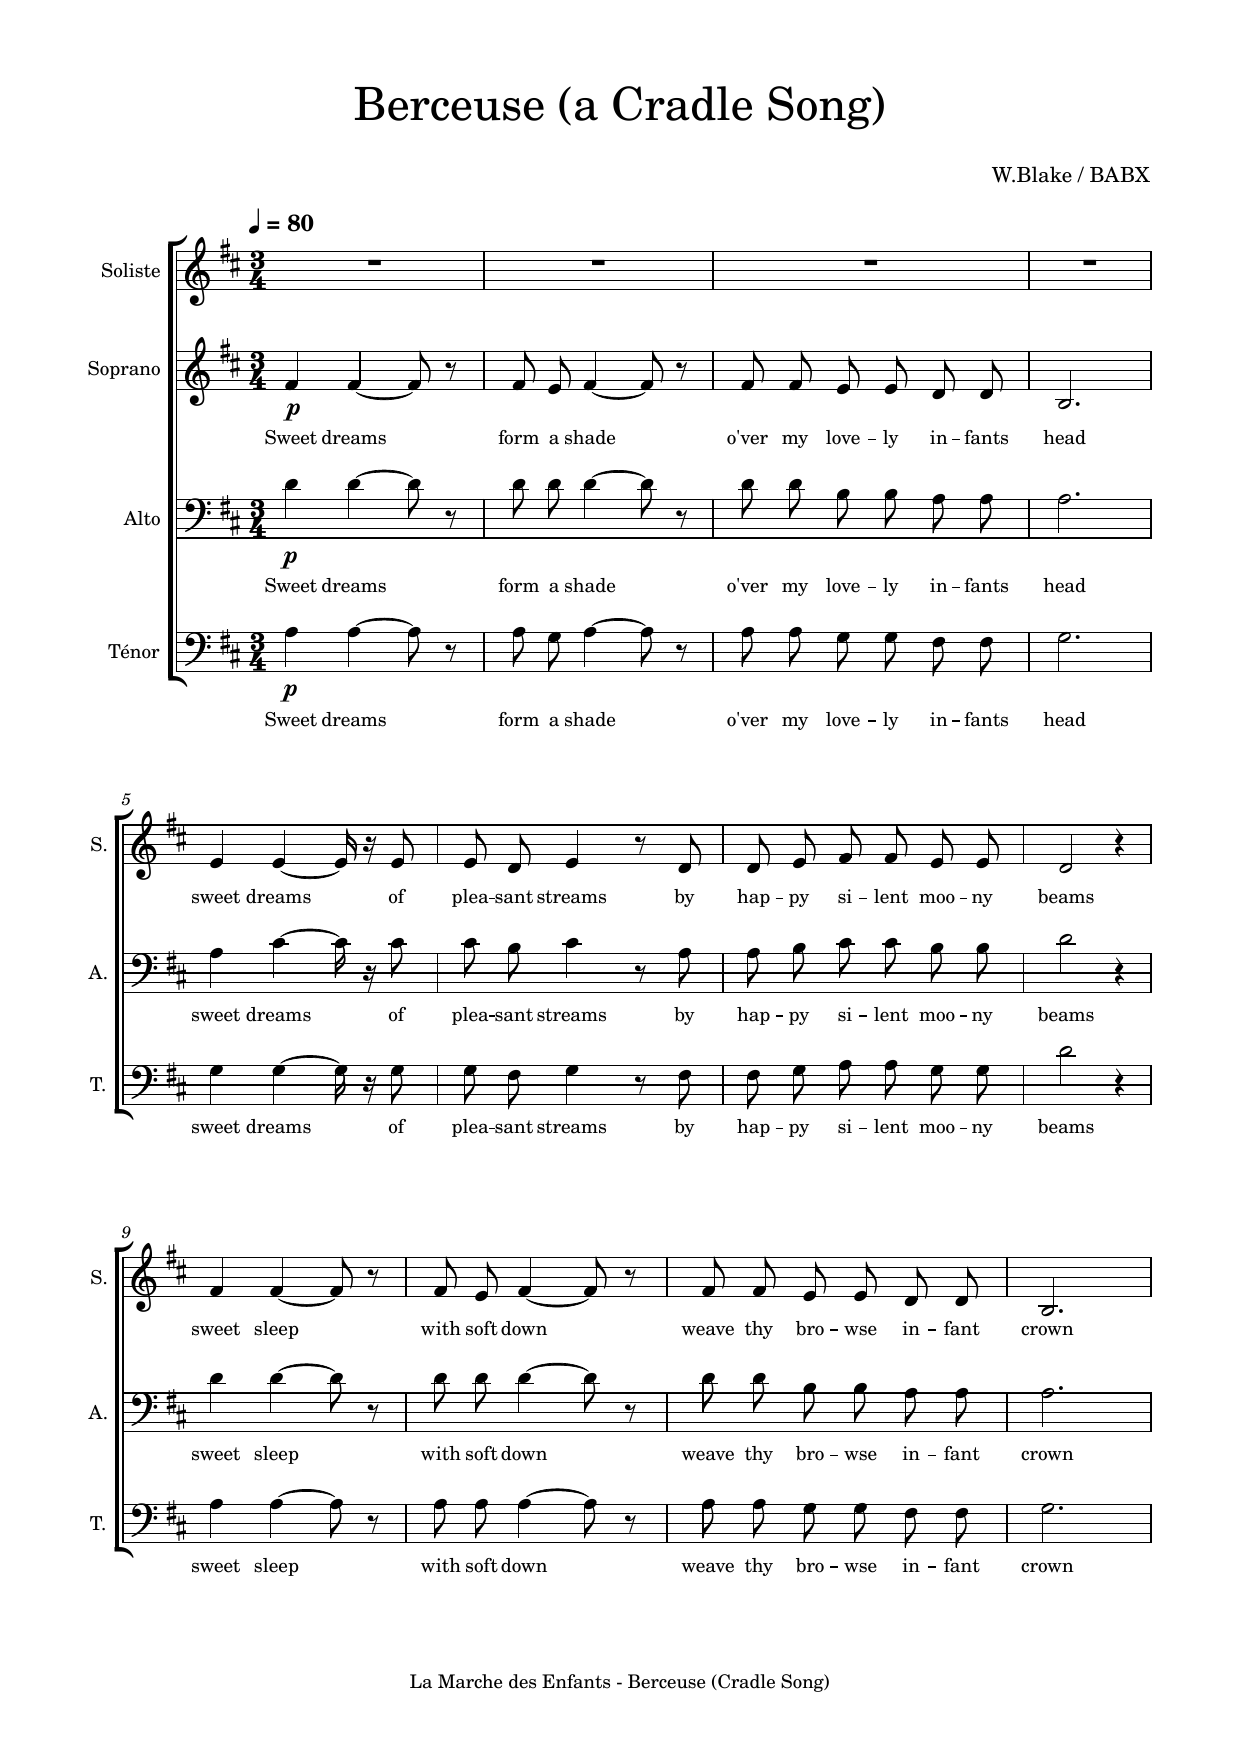 David Babin (Babx) Berceuse (A Cradle Song) Sheet Music Notes & Chords for Choir - Download or Print PDF